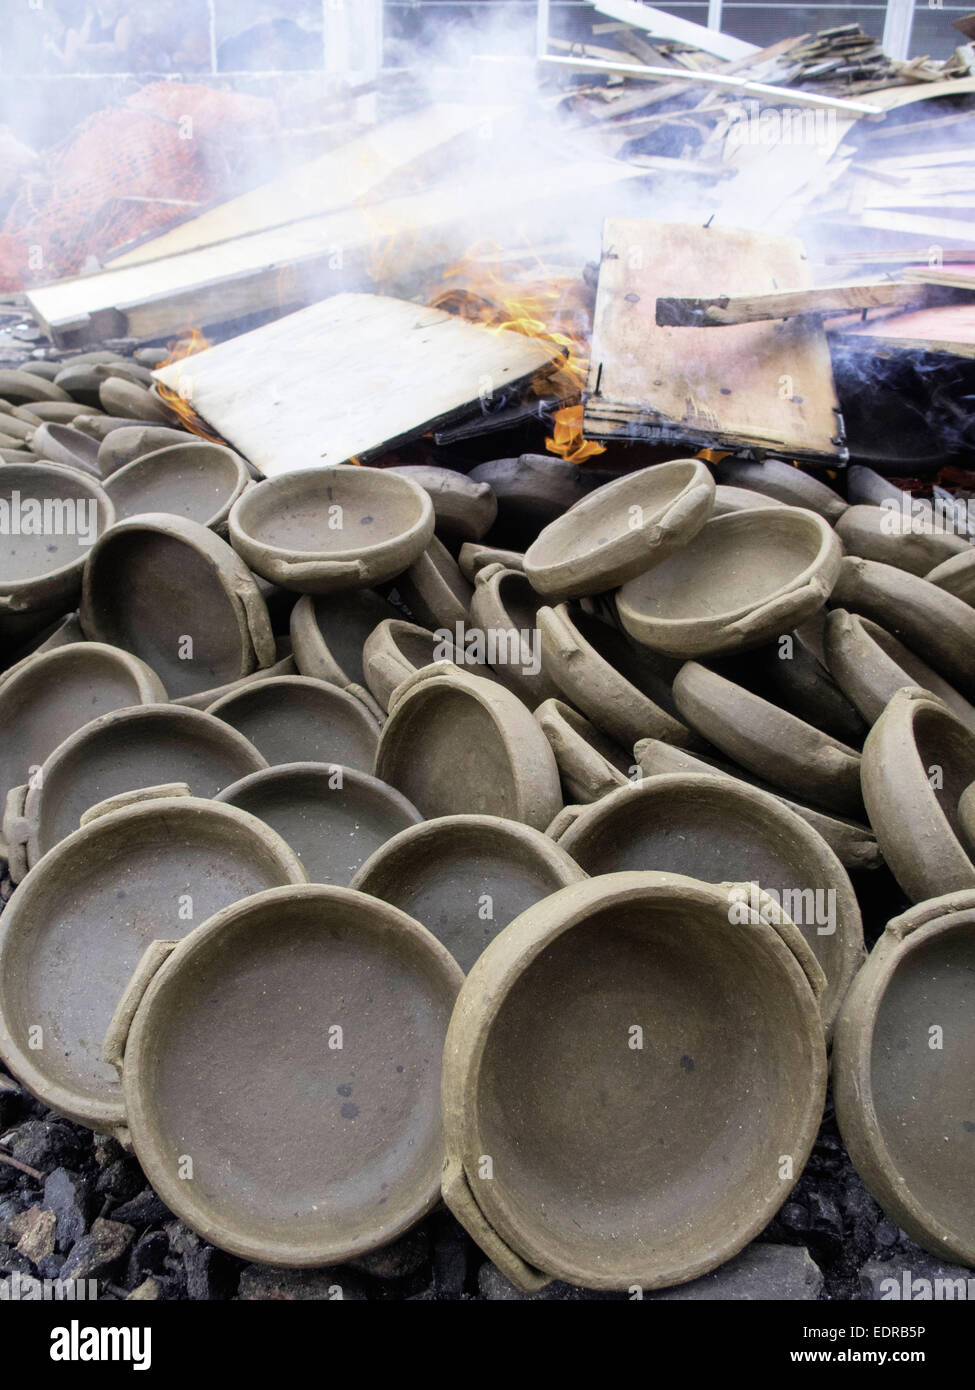 Pile de pot en argile, Paneleiras, Vitoria, Espirito Santo, au Brésil. Banque D'Images